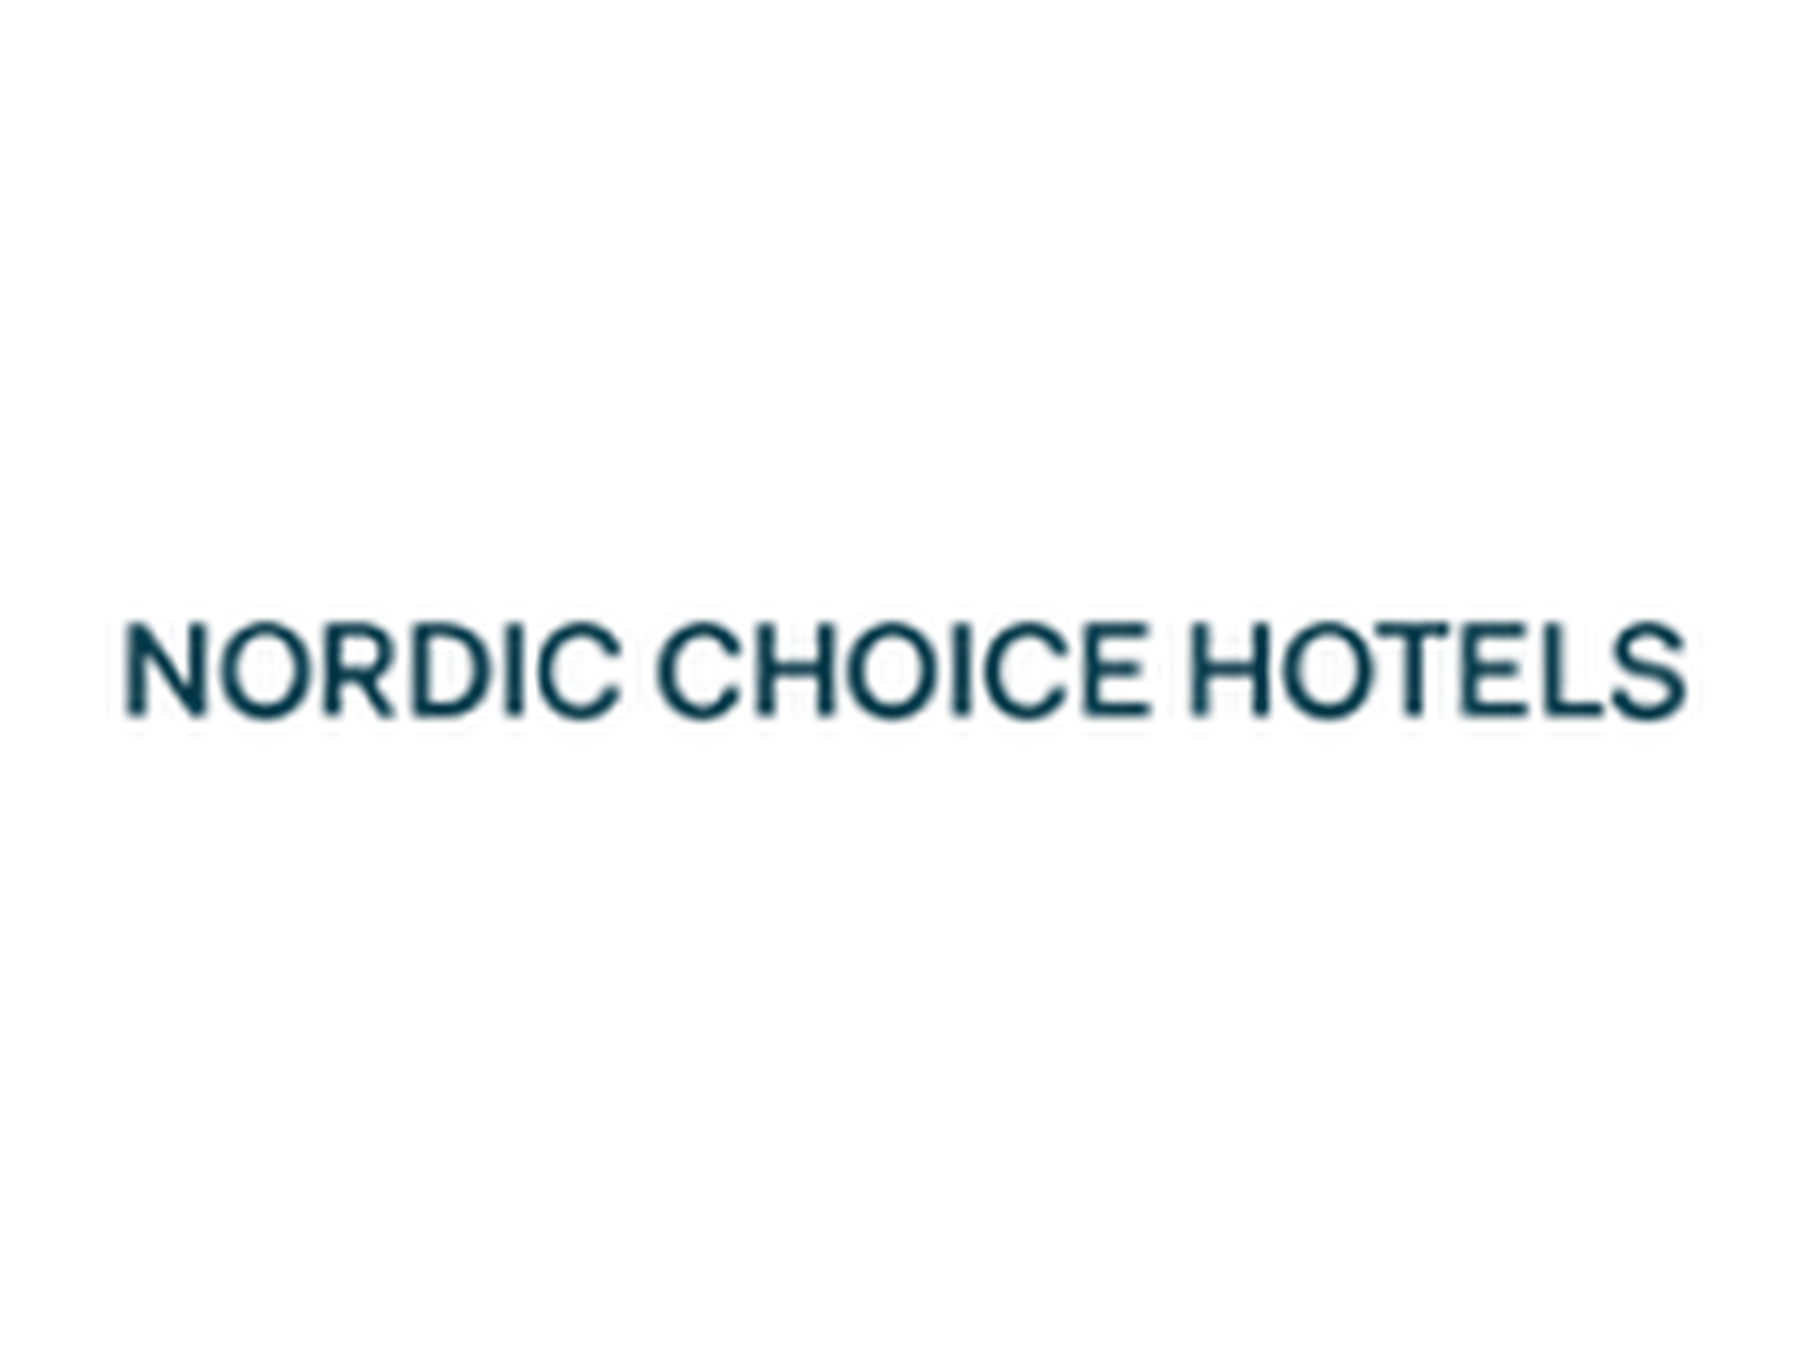 Nordic Choice Hotels rabattkode